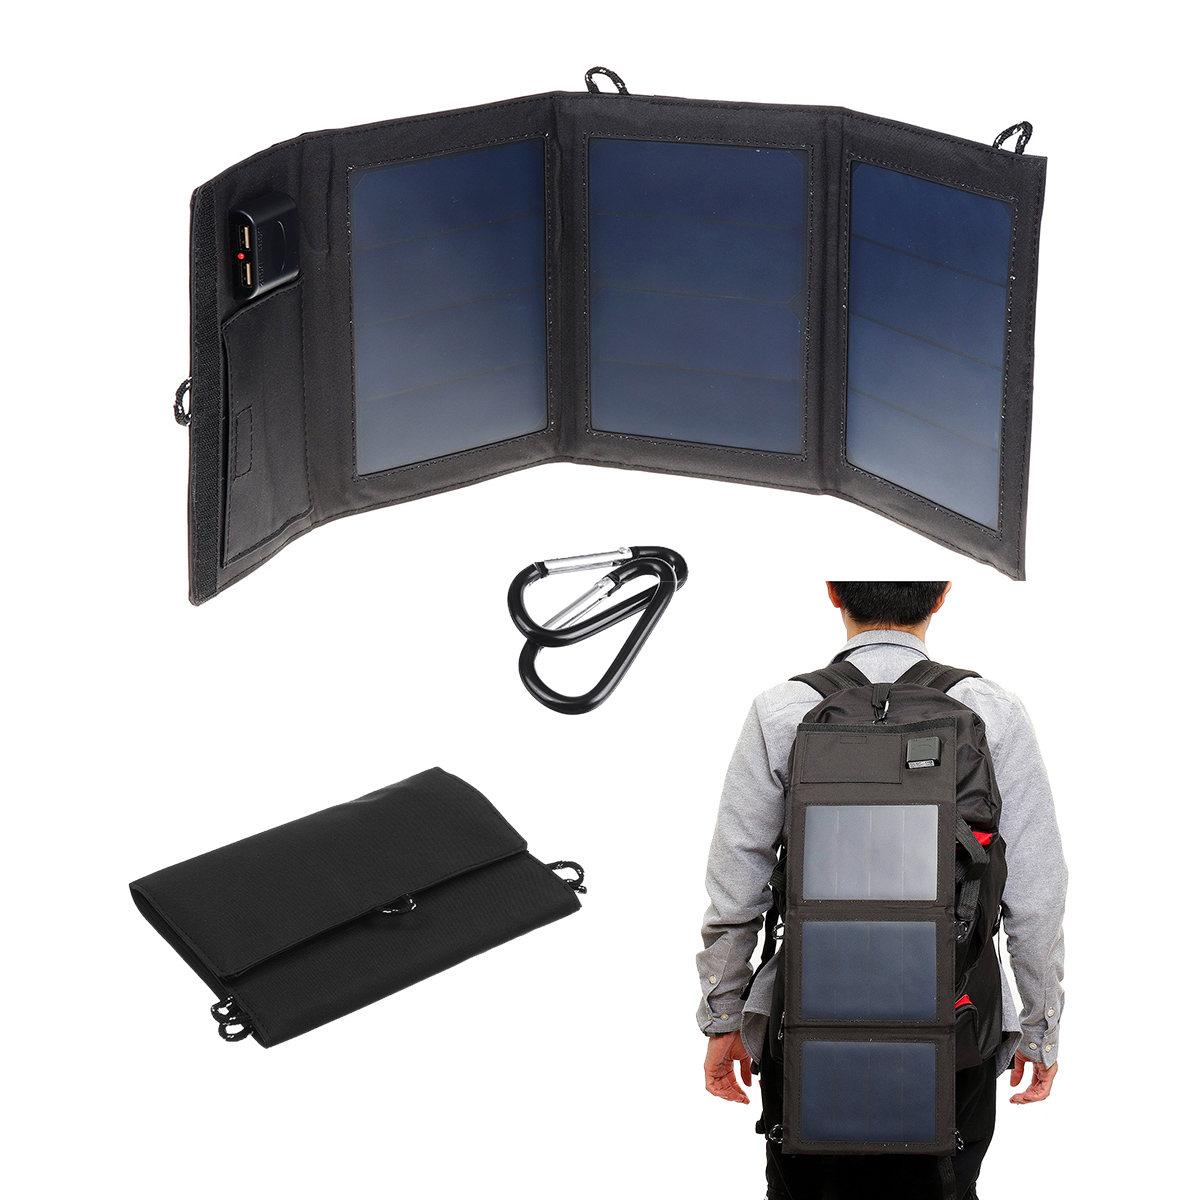 

12W 5.5V Tri-fold Foldable Waterproof Monocrystalline Silicon Solar Panel With 2Pcs Carabiner + USB Port